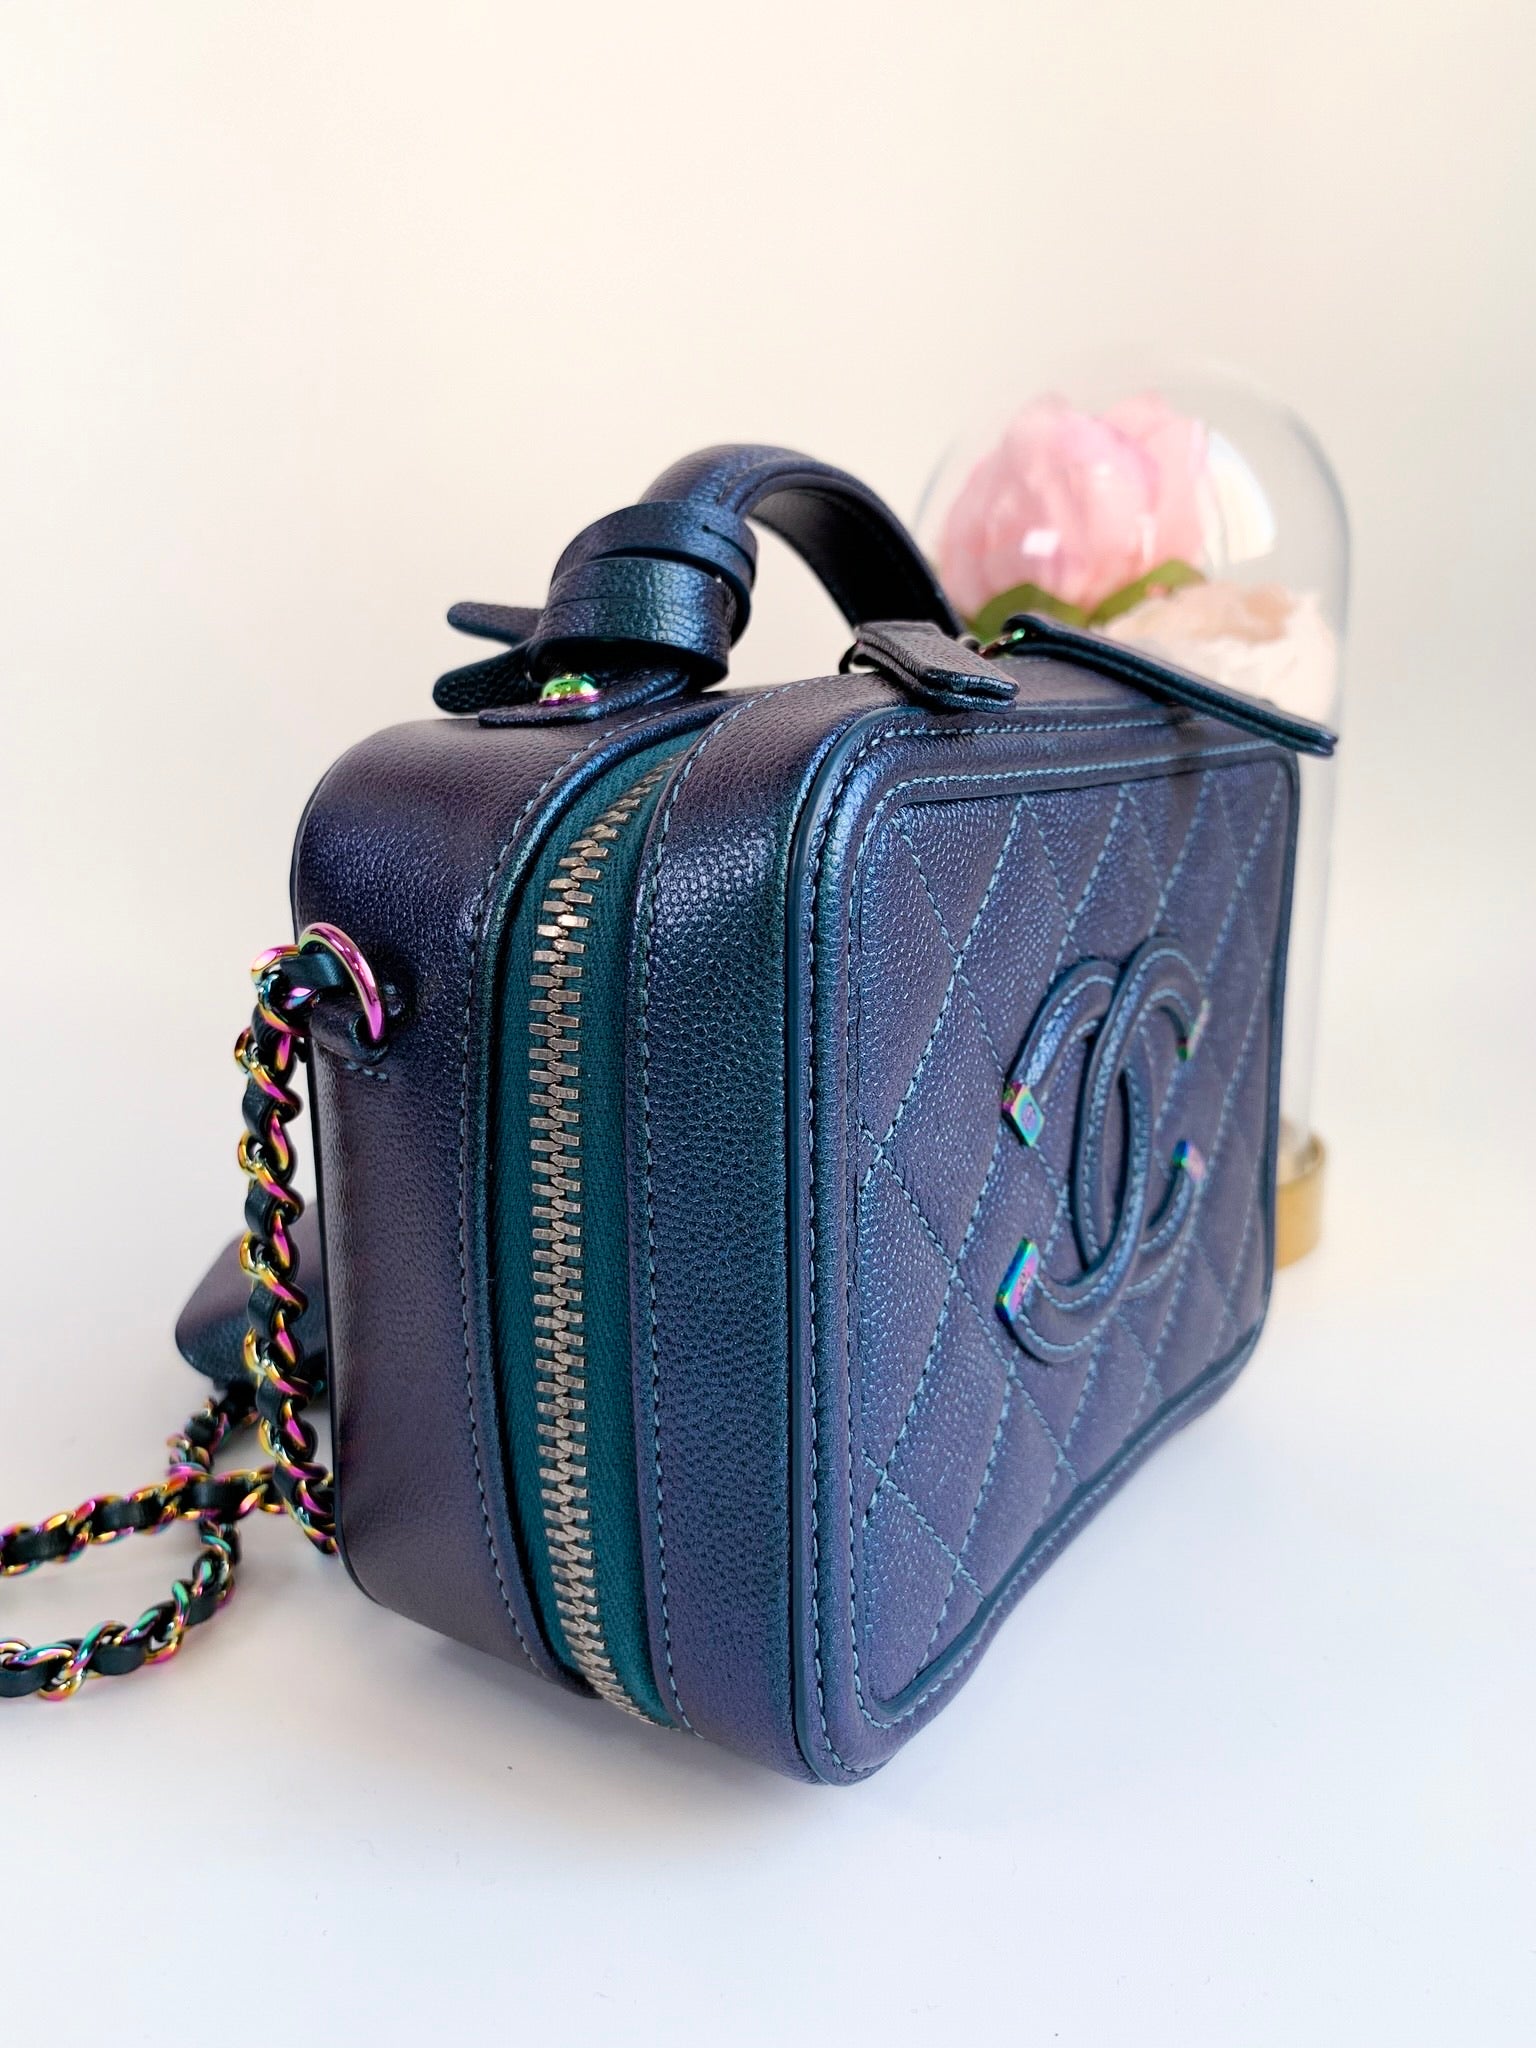 Chanel CC Filigree Grained Vanity Case Bag A93343 Light Green 2018